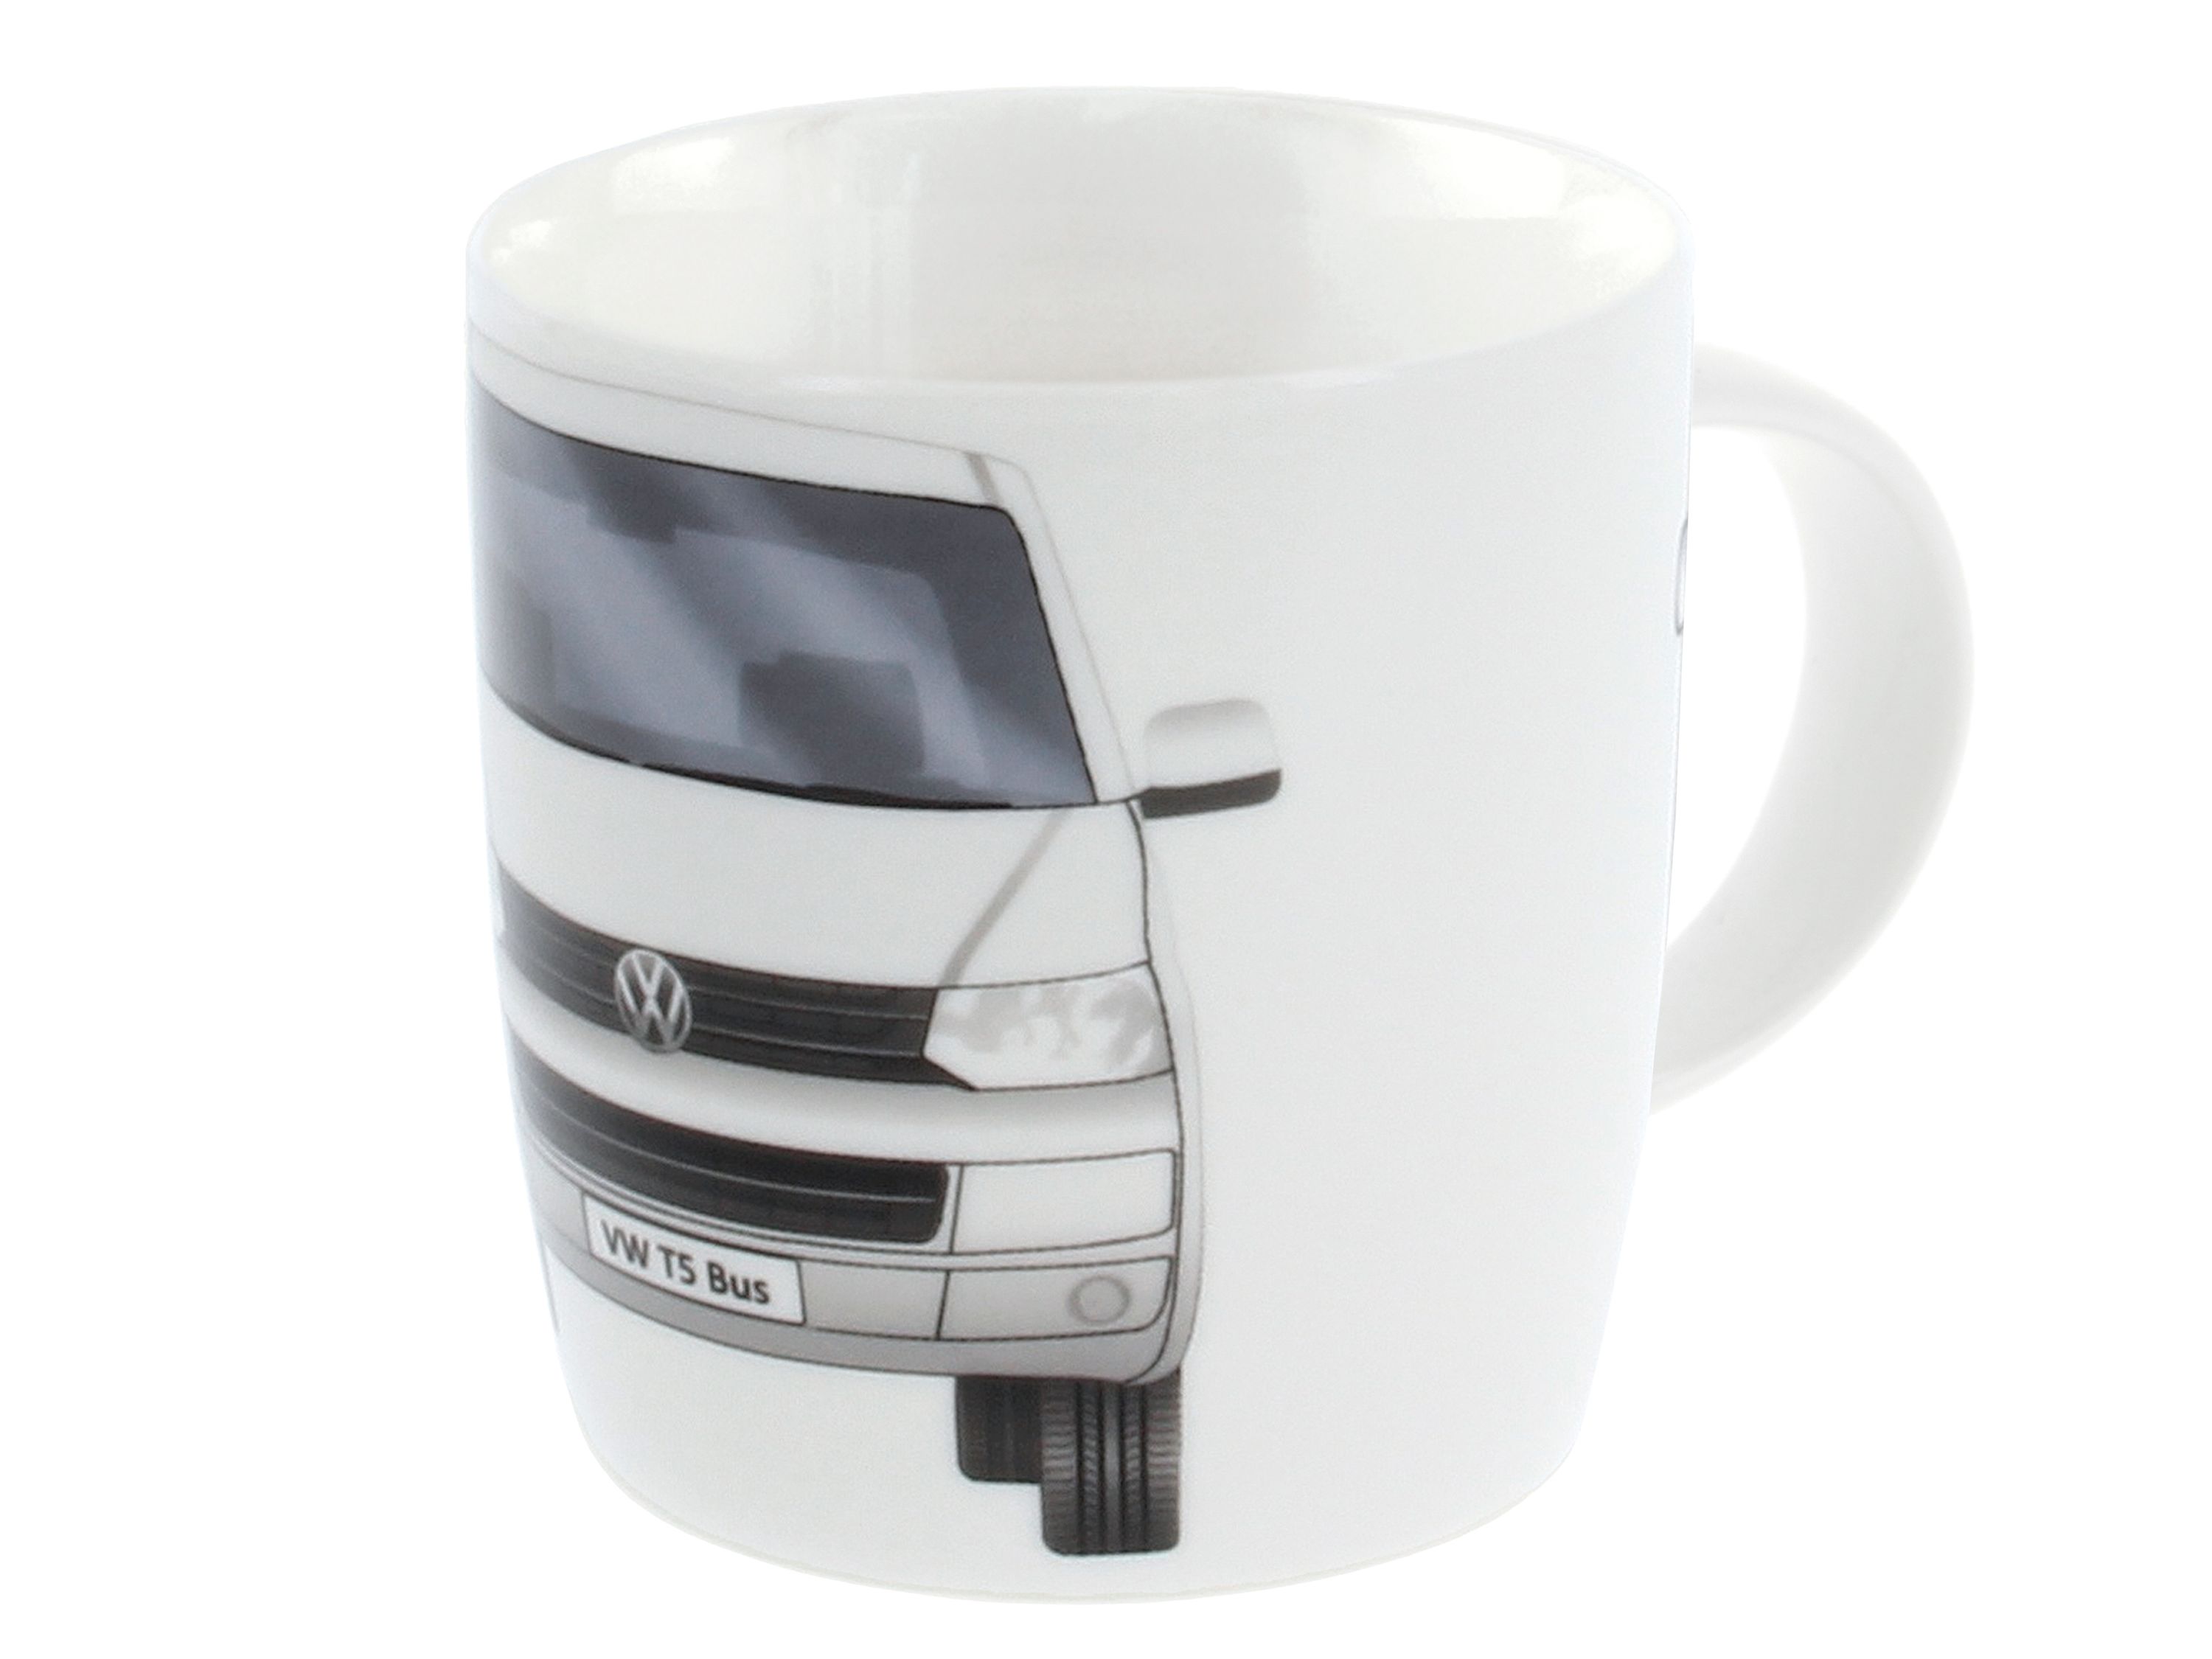 VW T5 Bulli Bus coffee cup 370ml